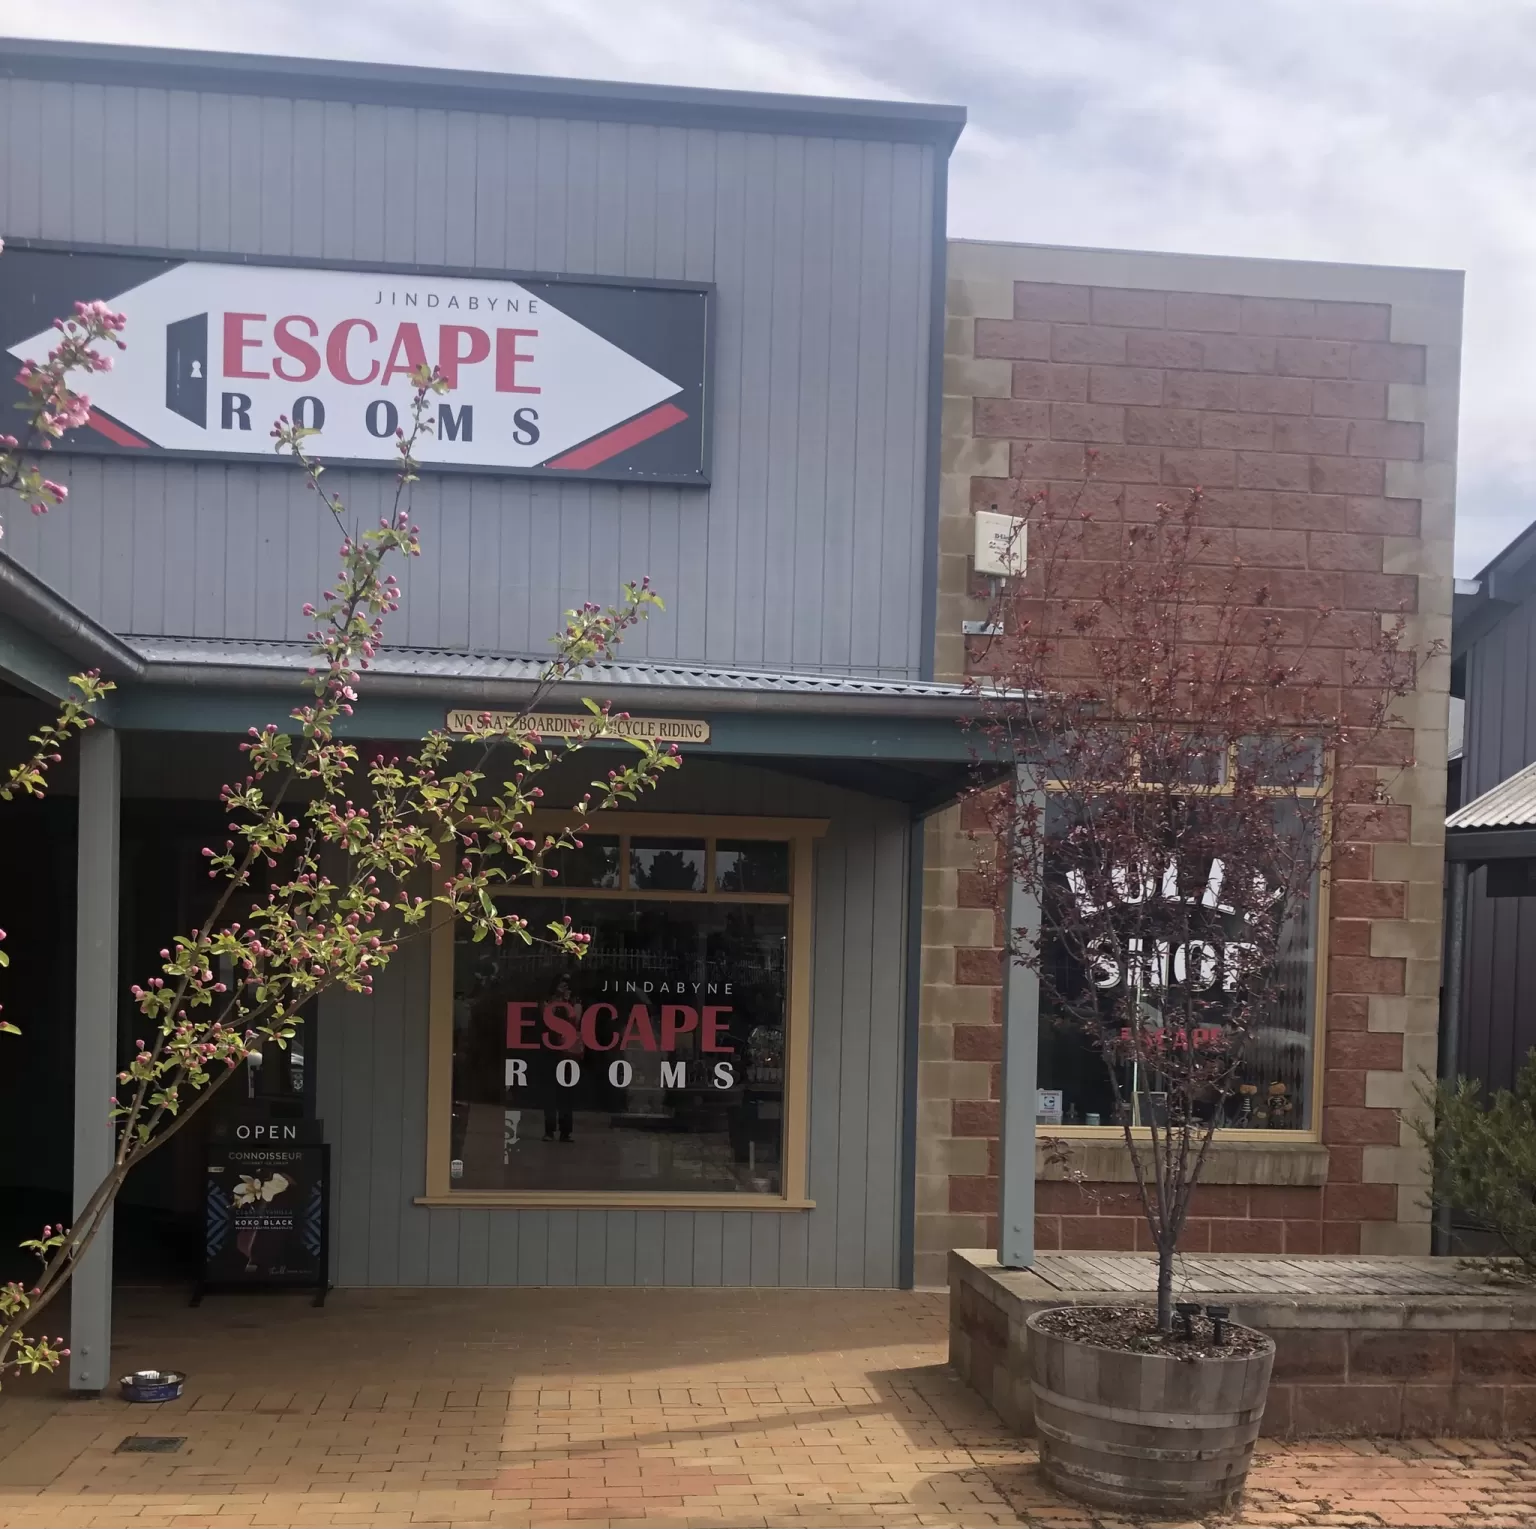 Jindabyne Escape Rooms image